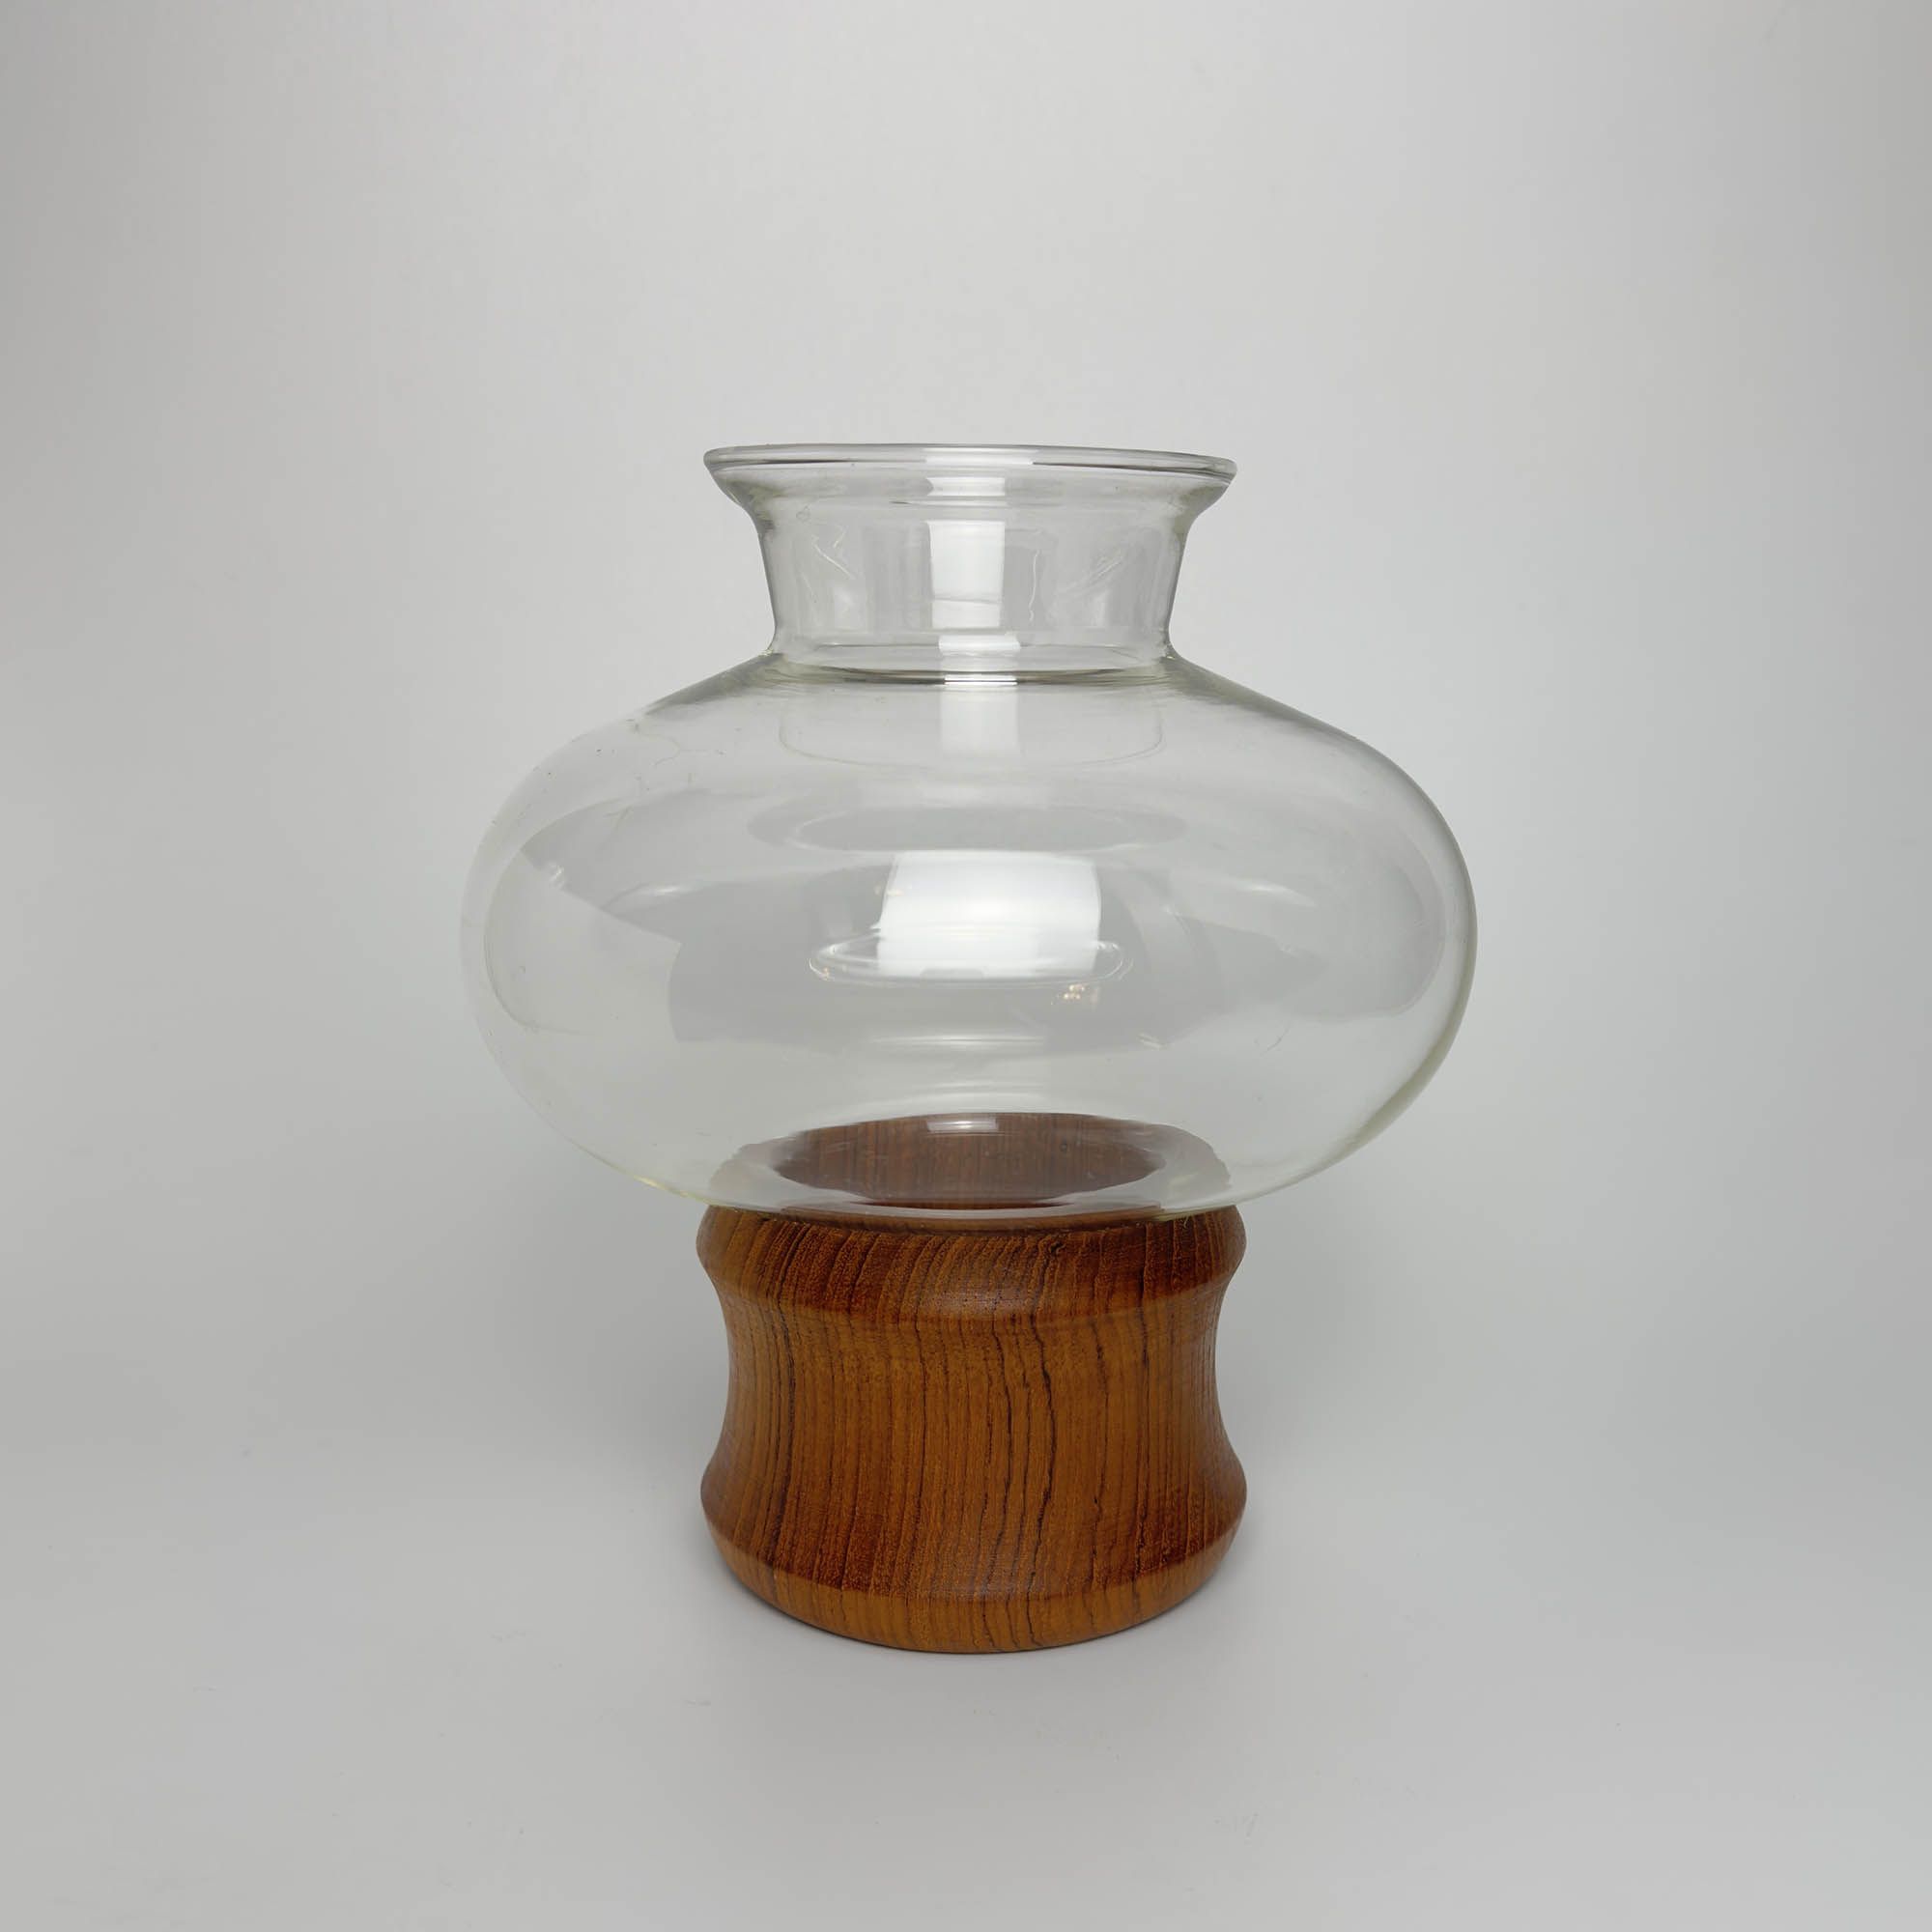 Vintage 1970’s Goodwood Genuine Teak Glass Globe Candle Holder. Made in Thailand